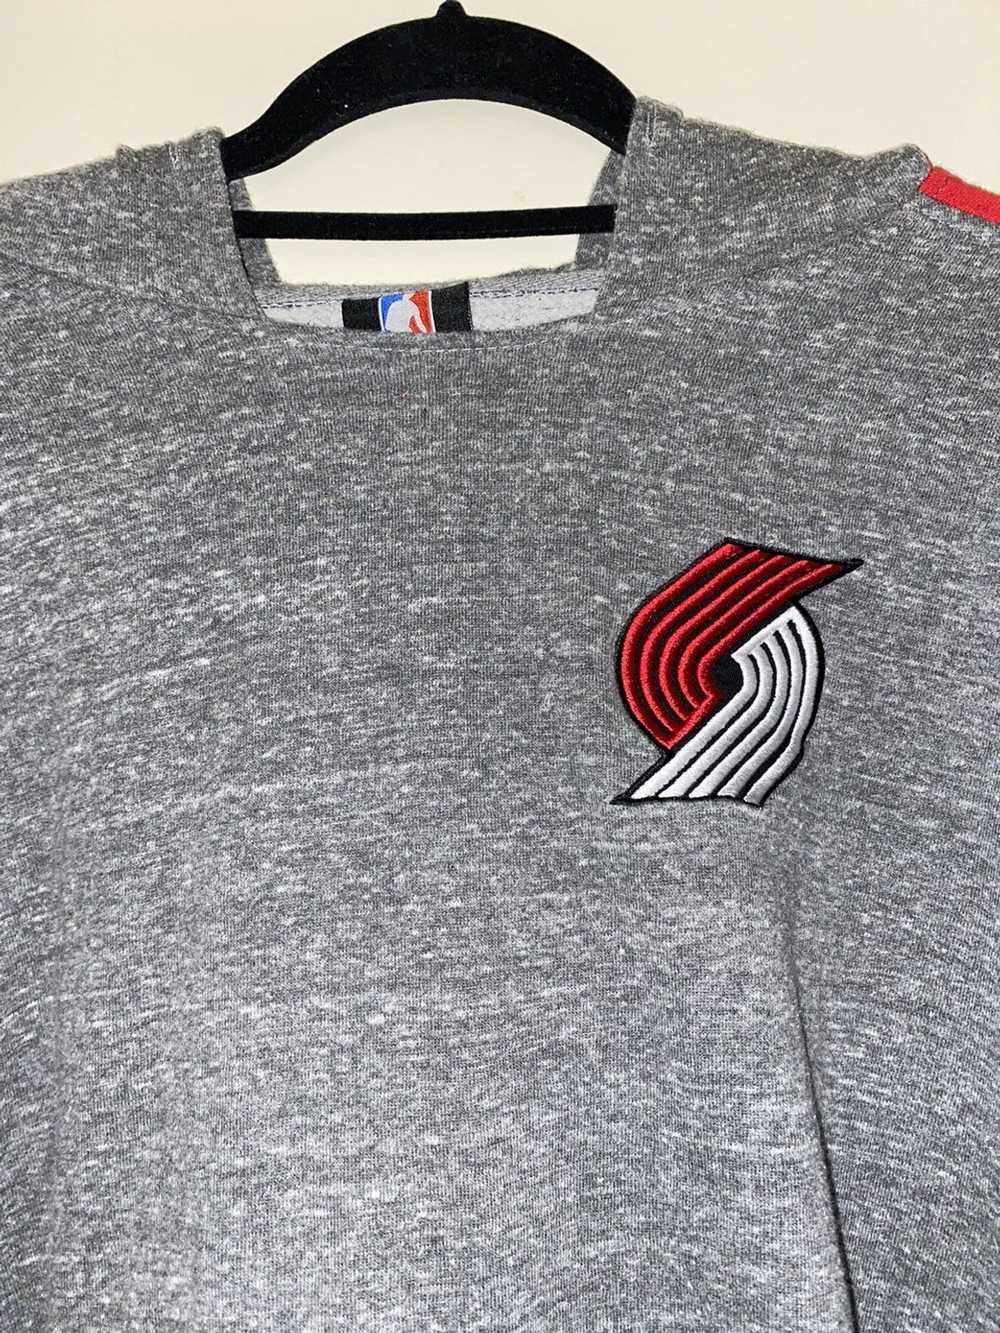 NBA Nike Portland trailblazers hoodie - image 2